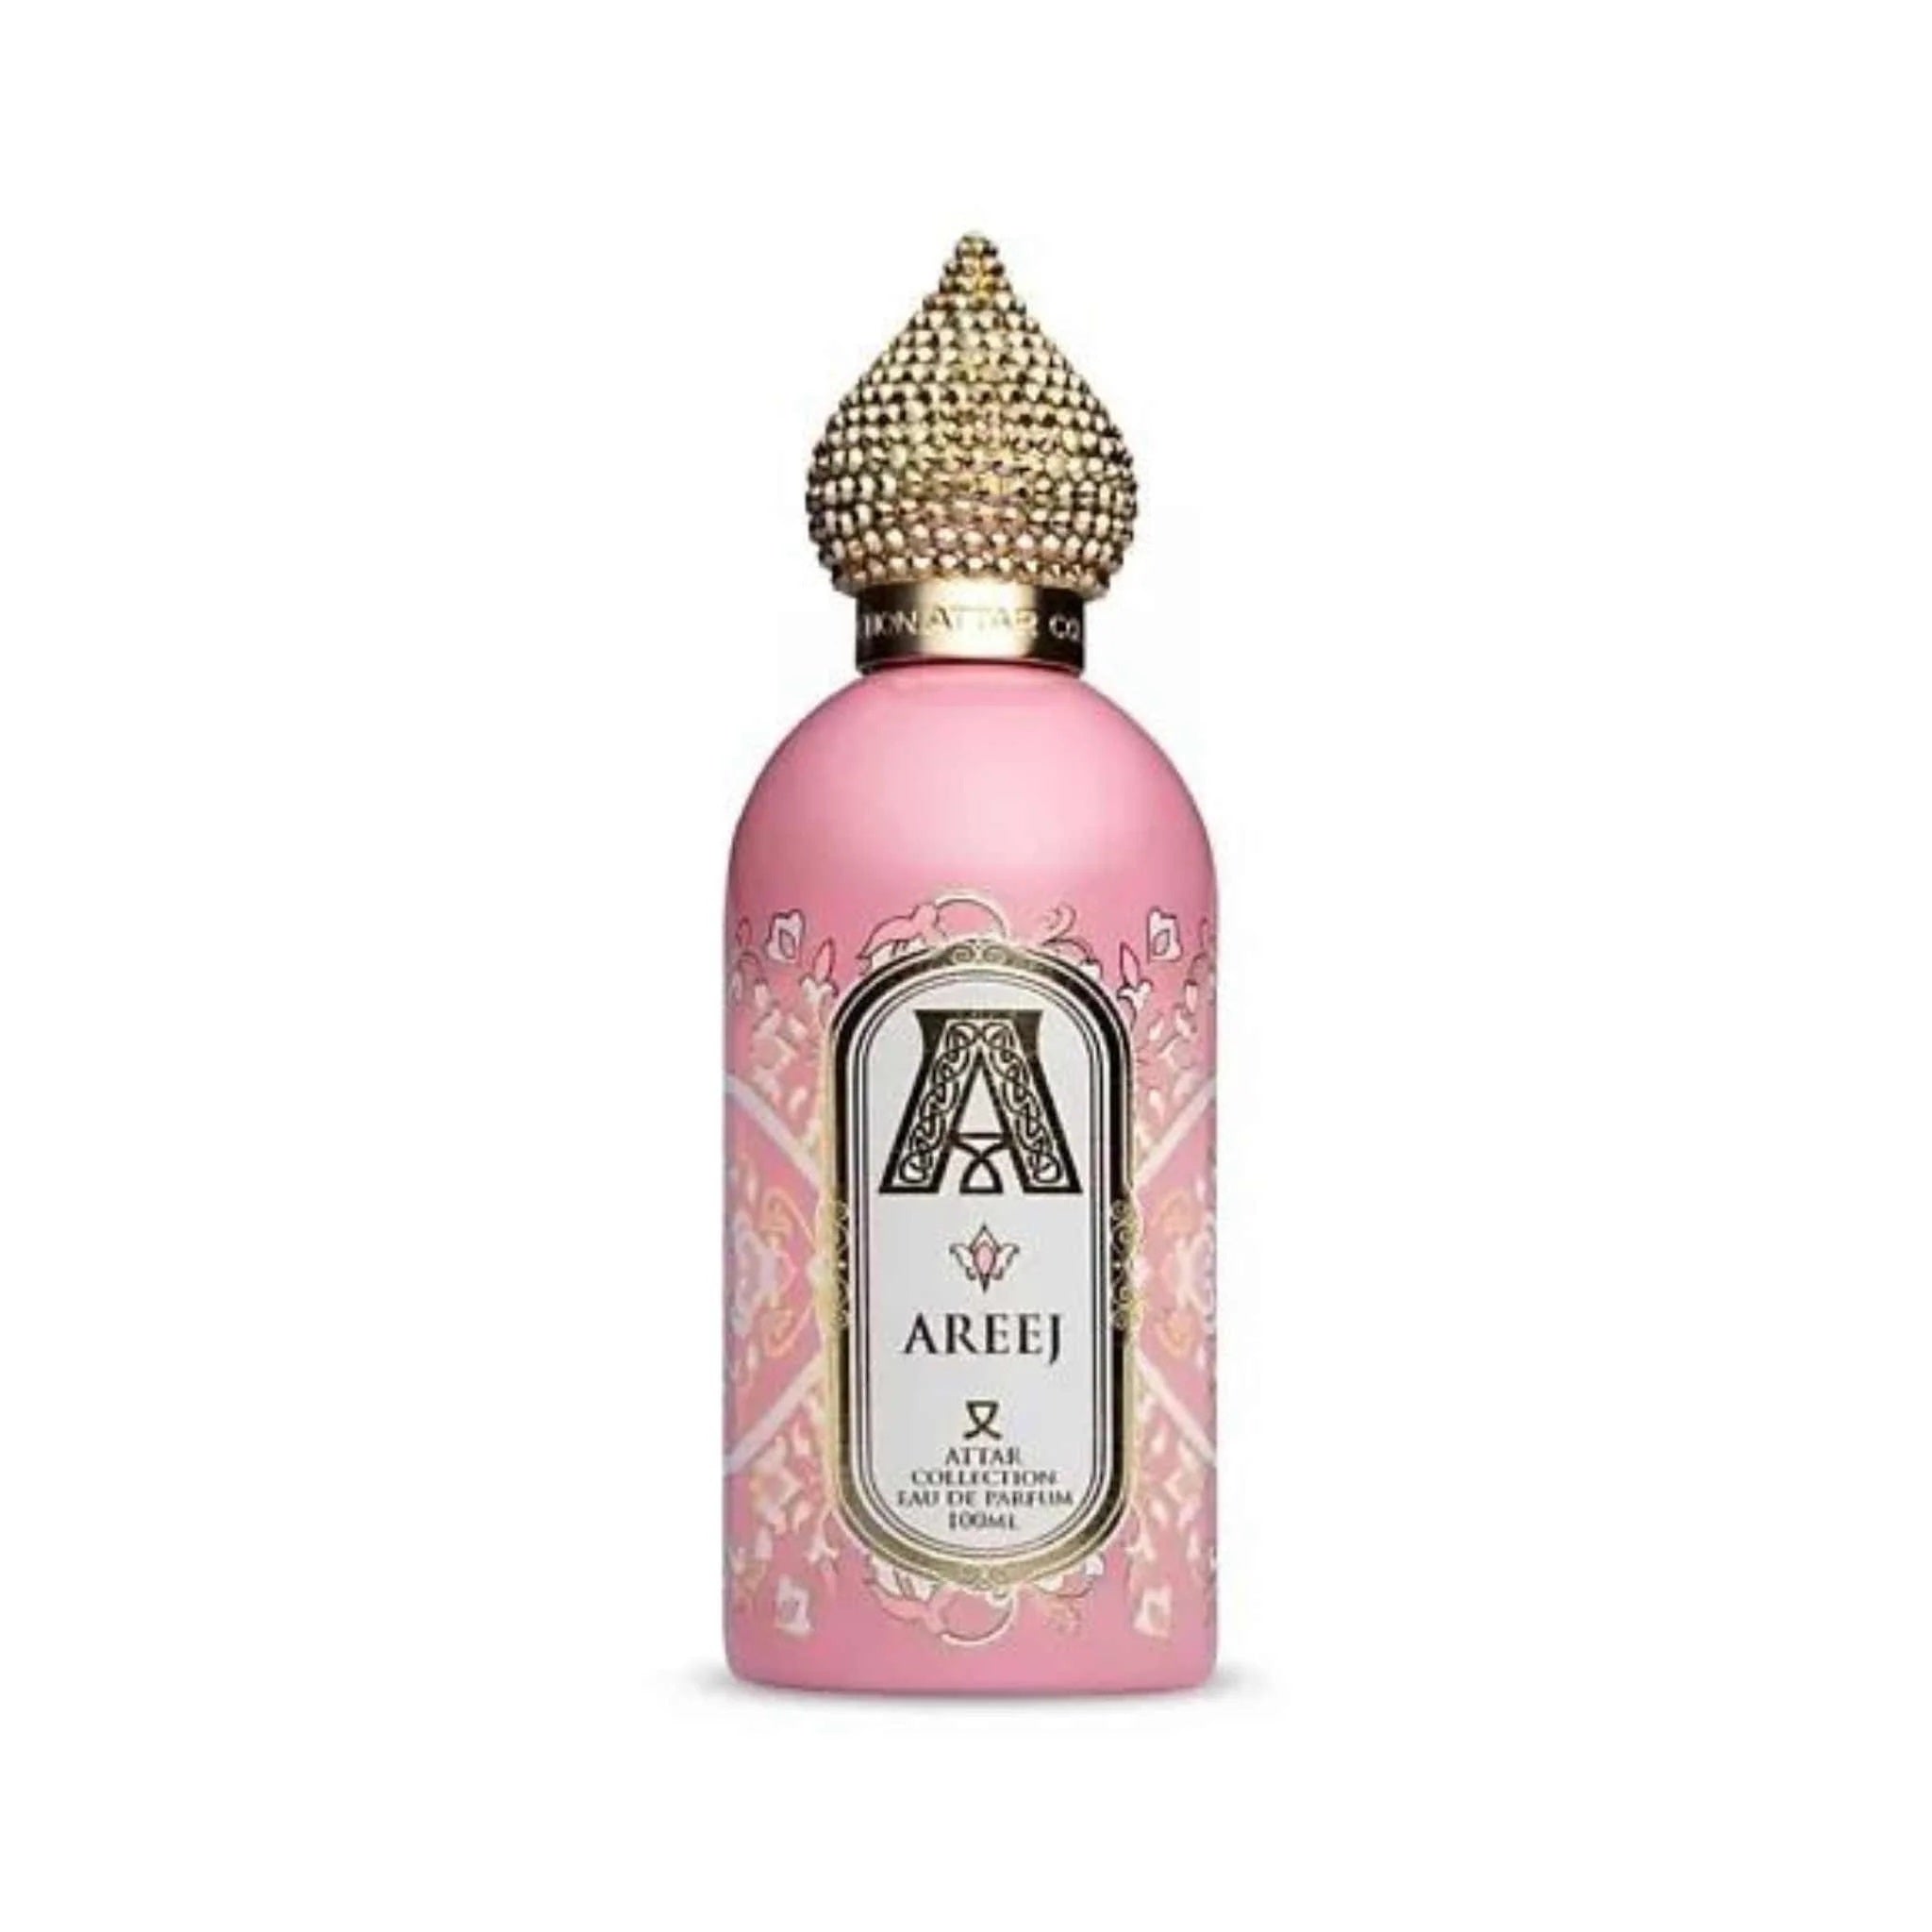 Attar Collection Areej Eau De Parfum 100ml